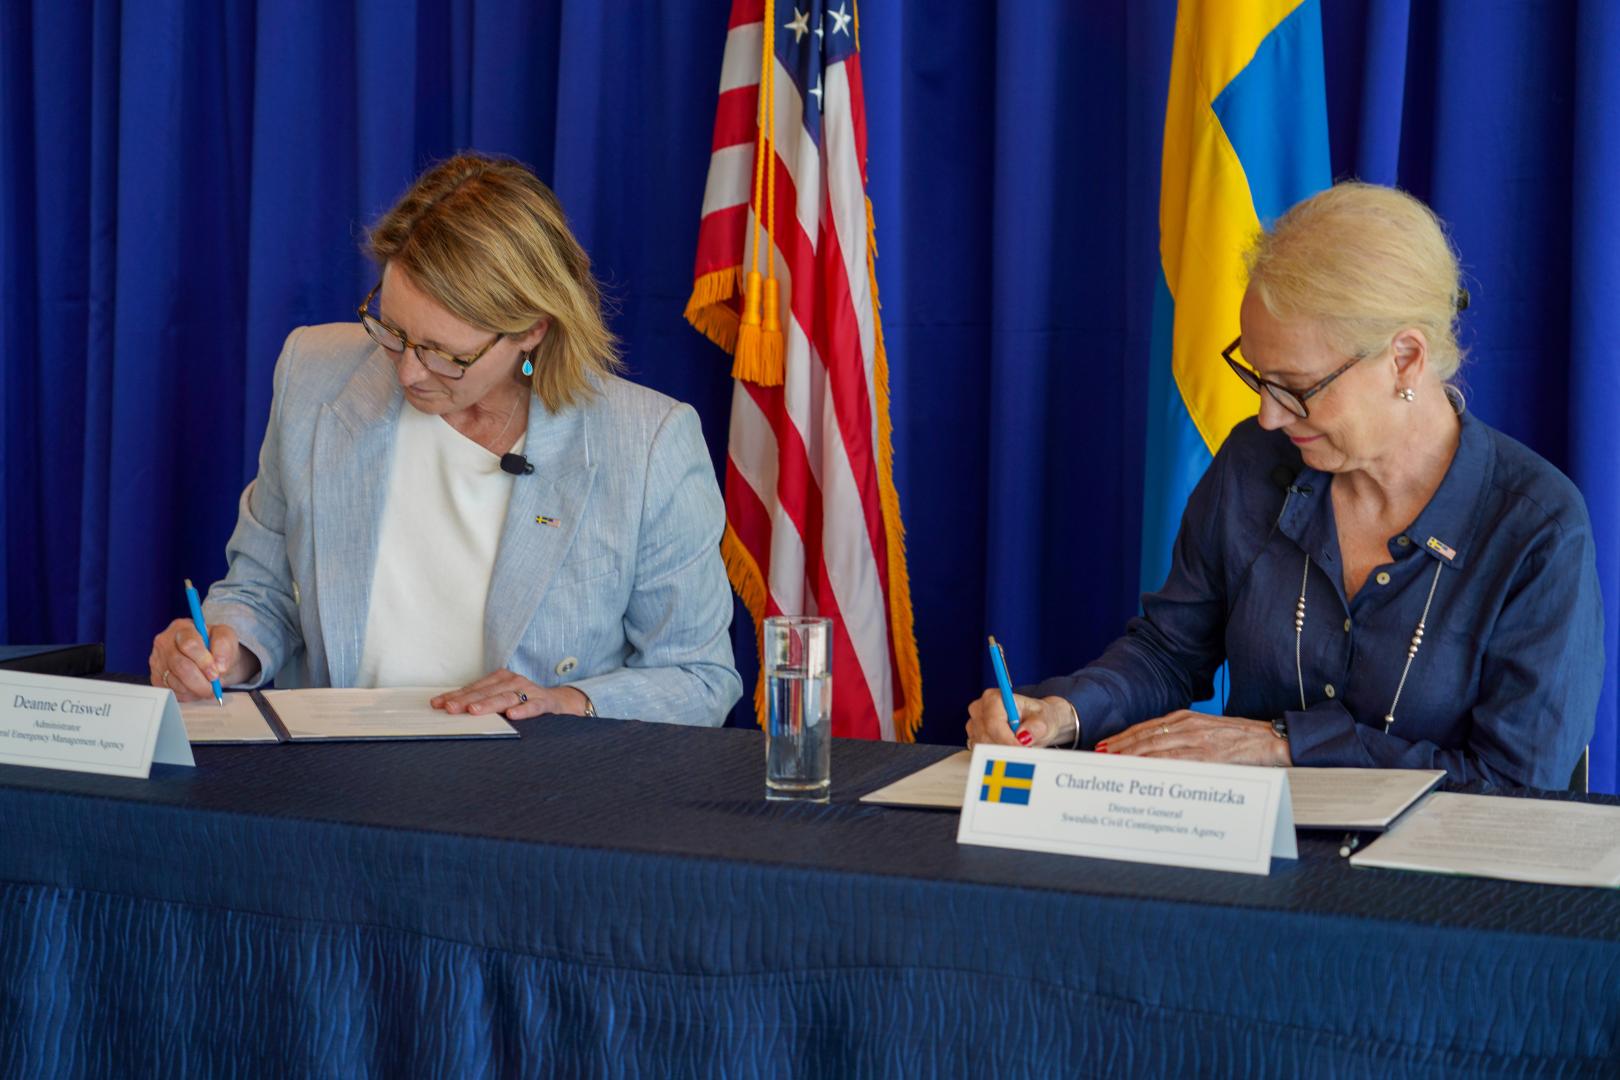 FEMA Administrator Deanne Criswell and Director General of the Swedish Civil Contingencies Agency Charlotte Petri Gornitzka sign a Memorandum of Understanding at The Swedish embassy in Washington, D.C. 